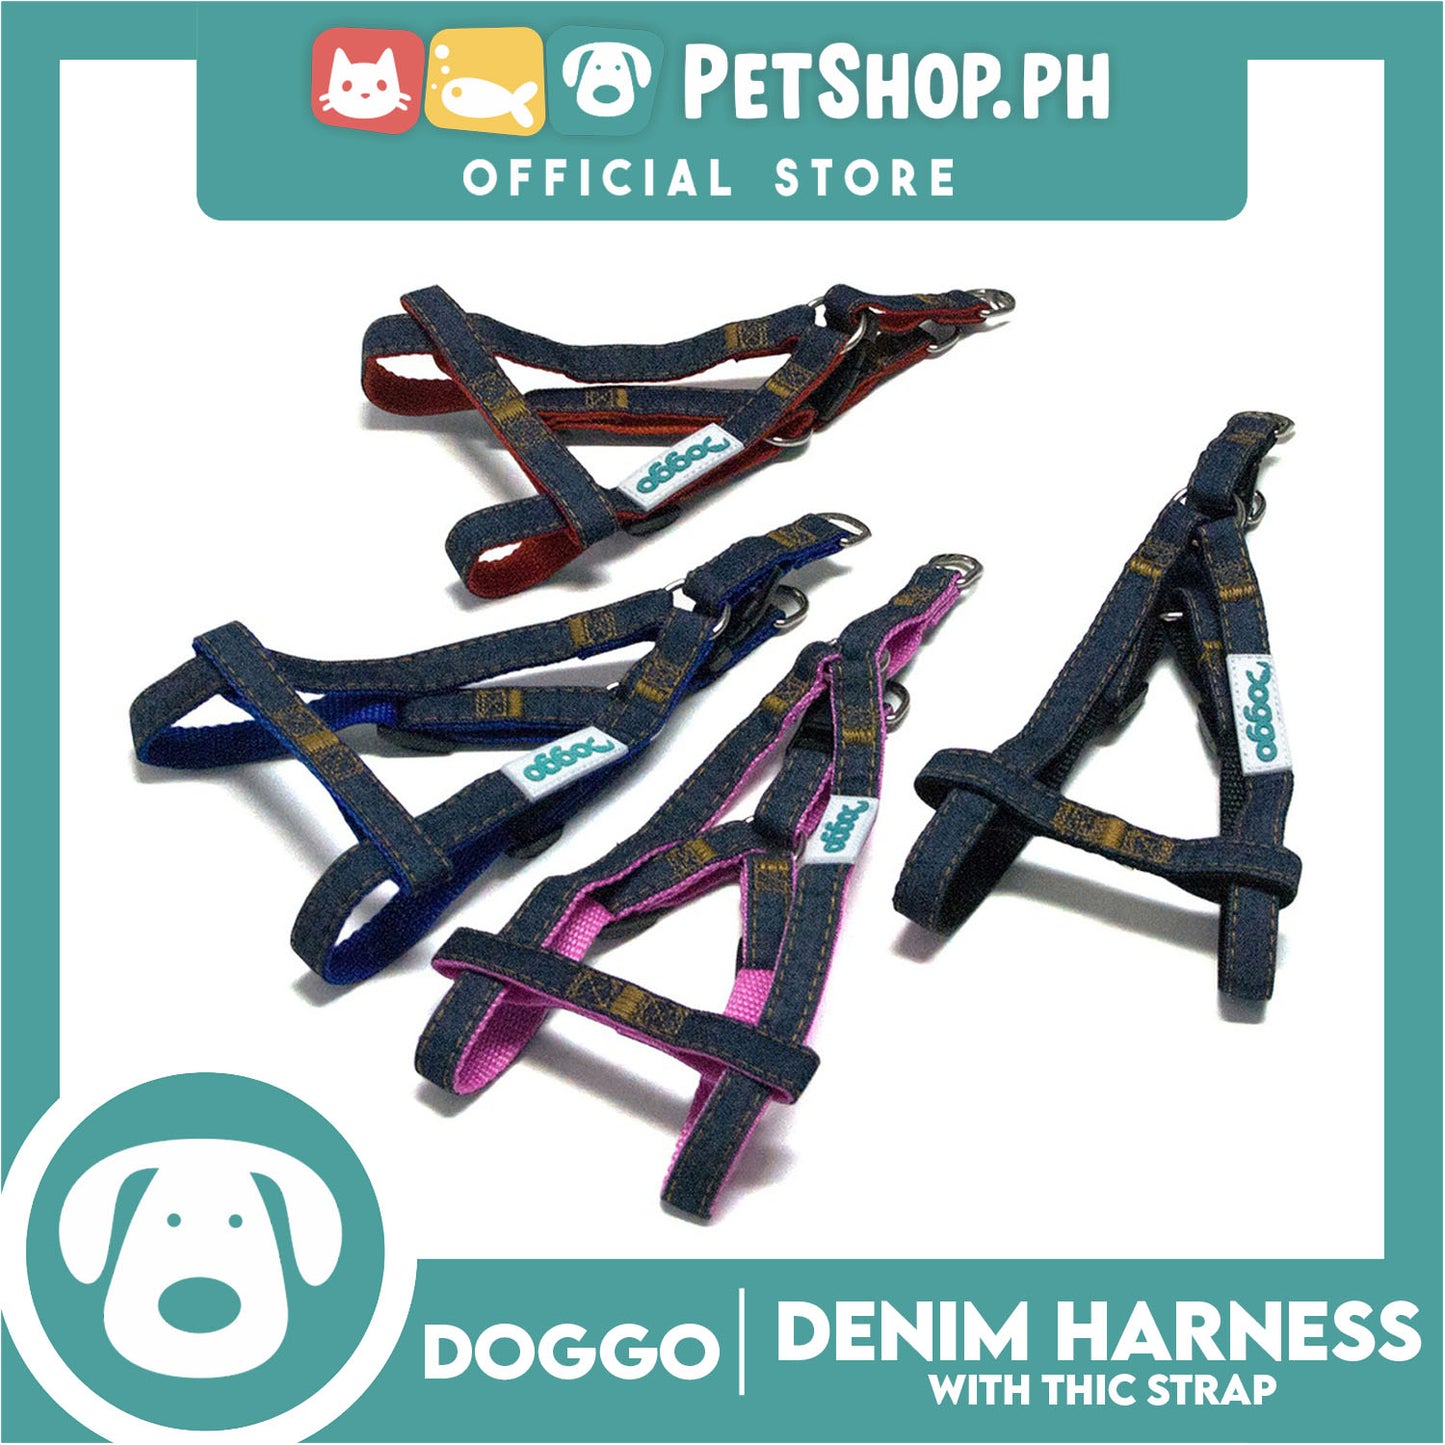 Doggo Denim Harness Large Size (Pink) Harness for Dog